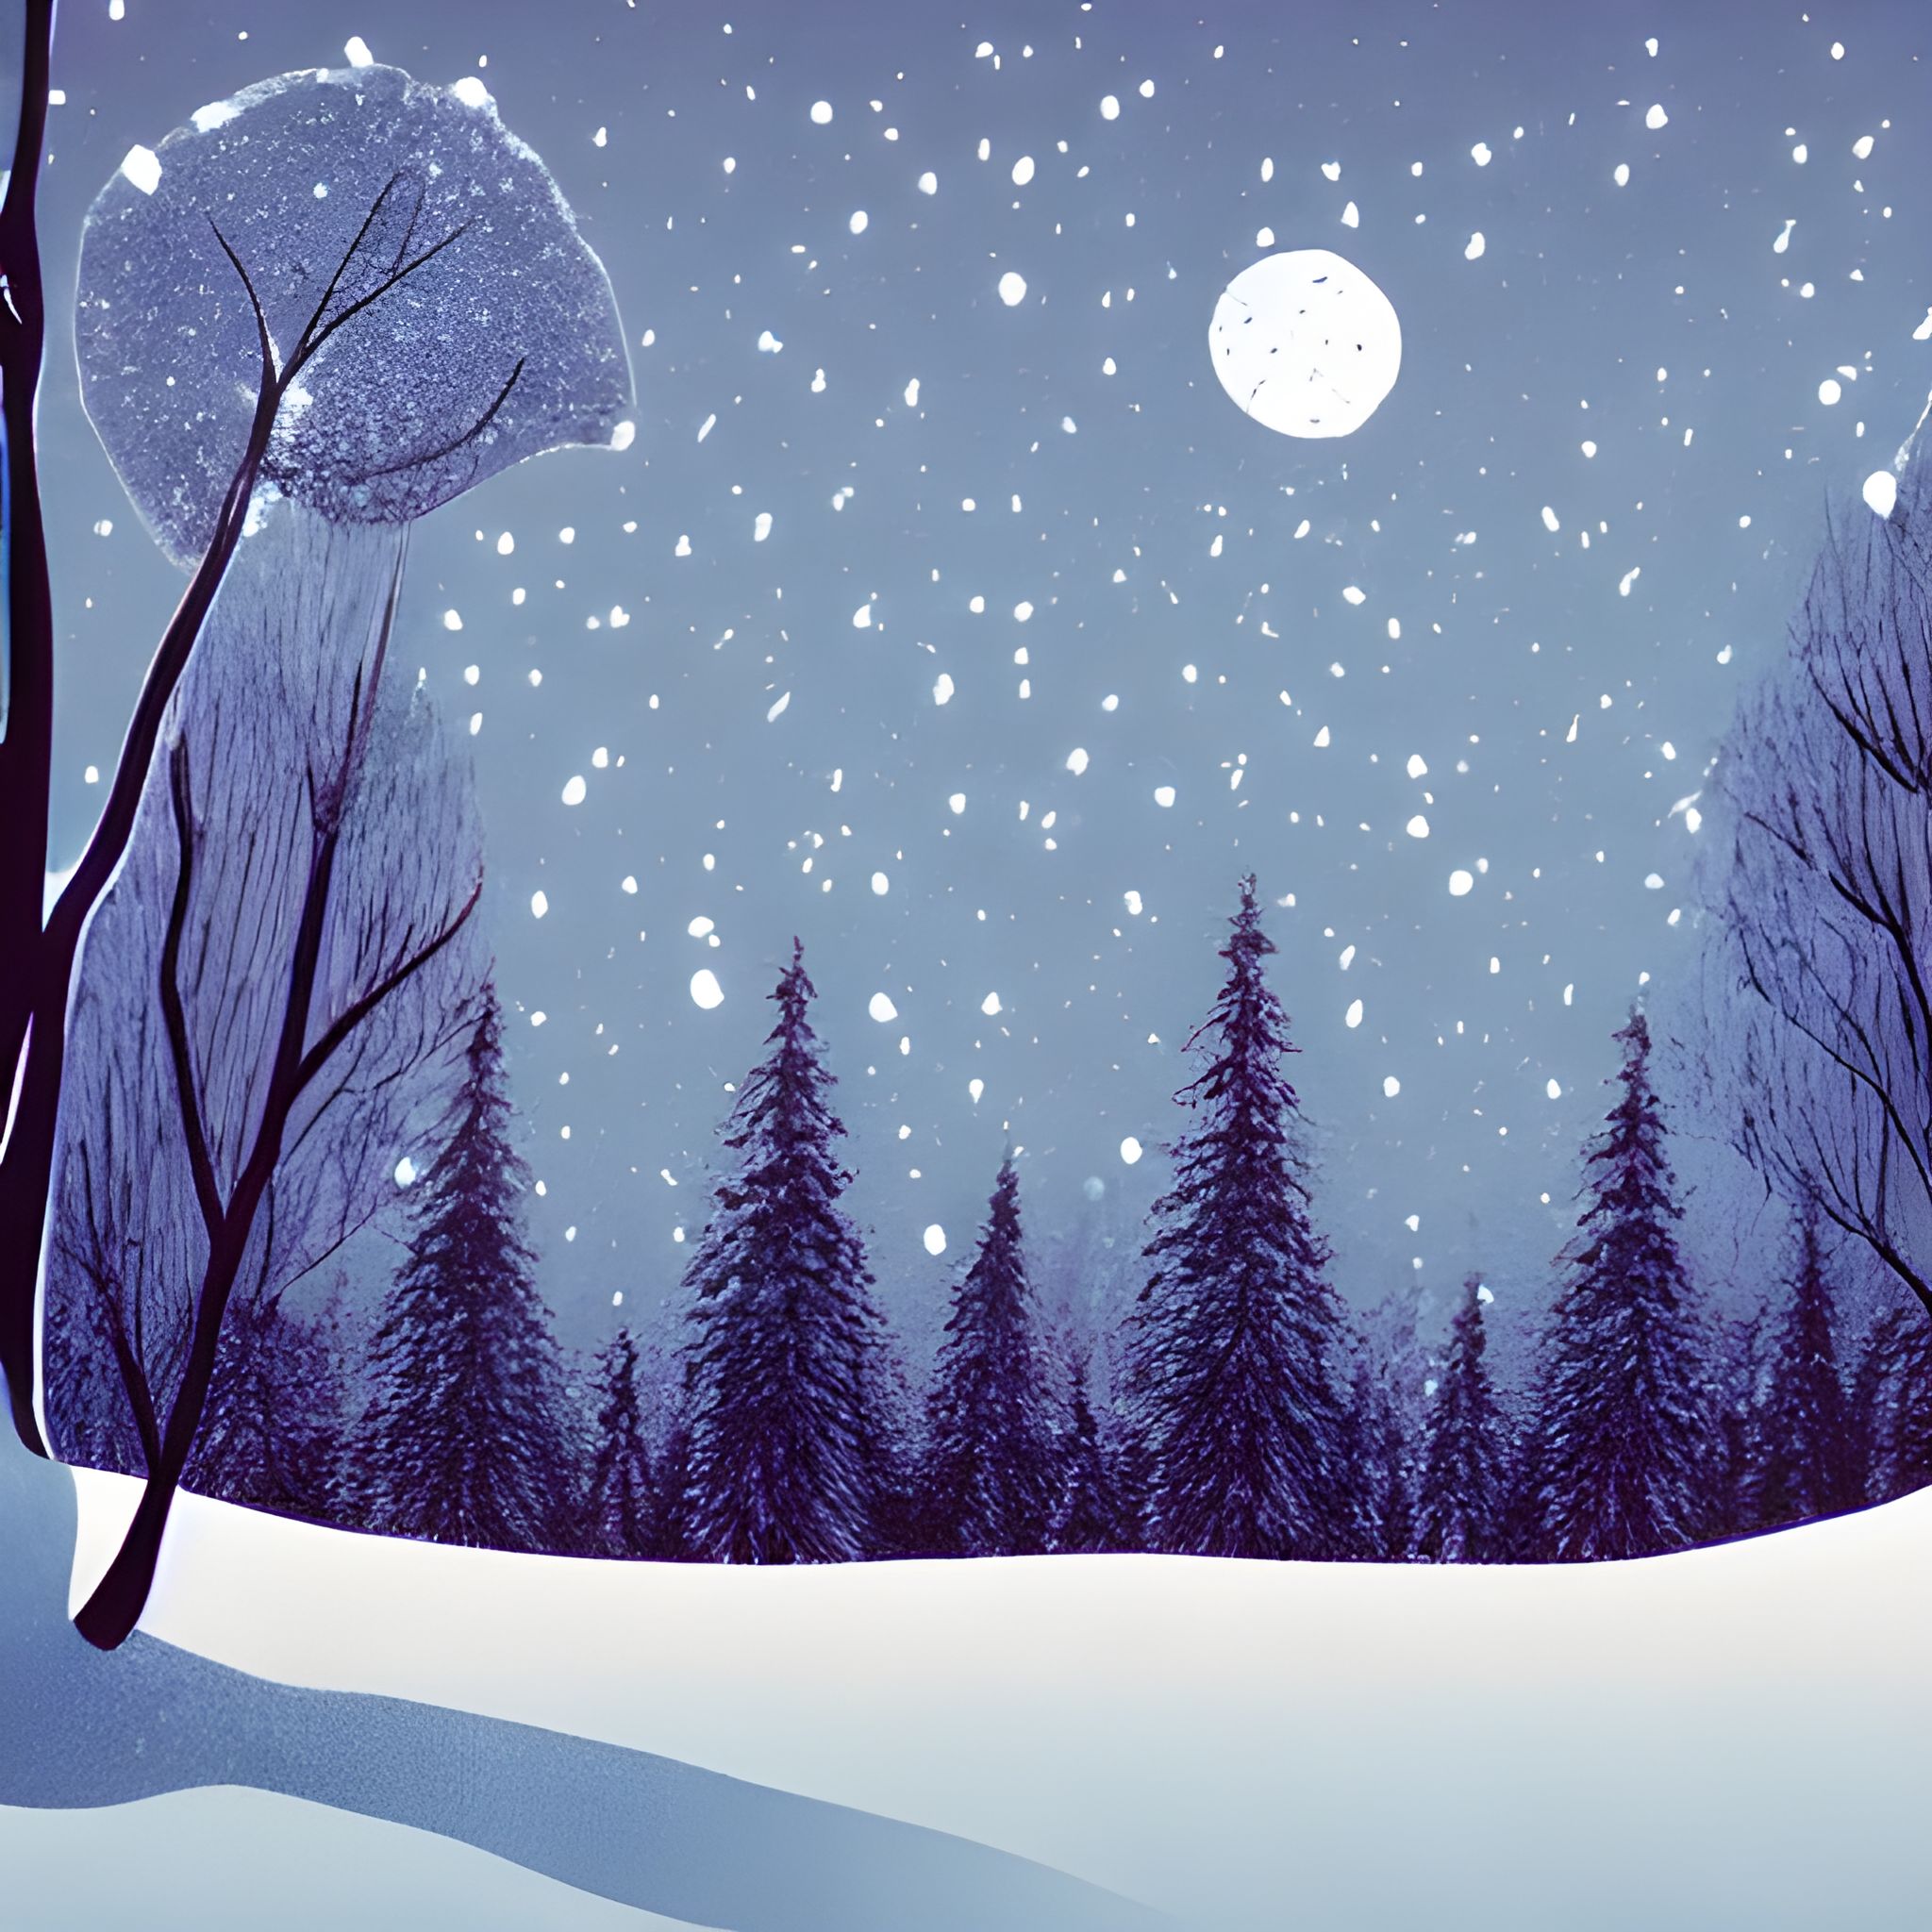 Minimalistic illustration landscape winter forest  human figure in it 1668453168587